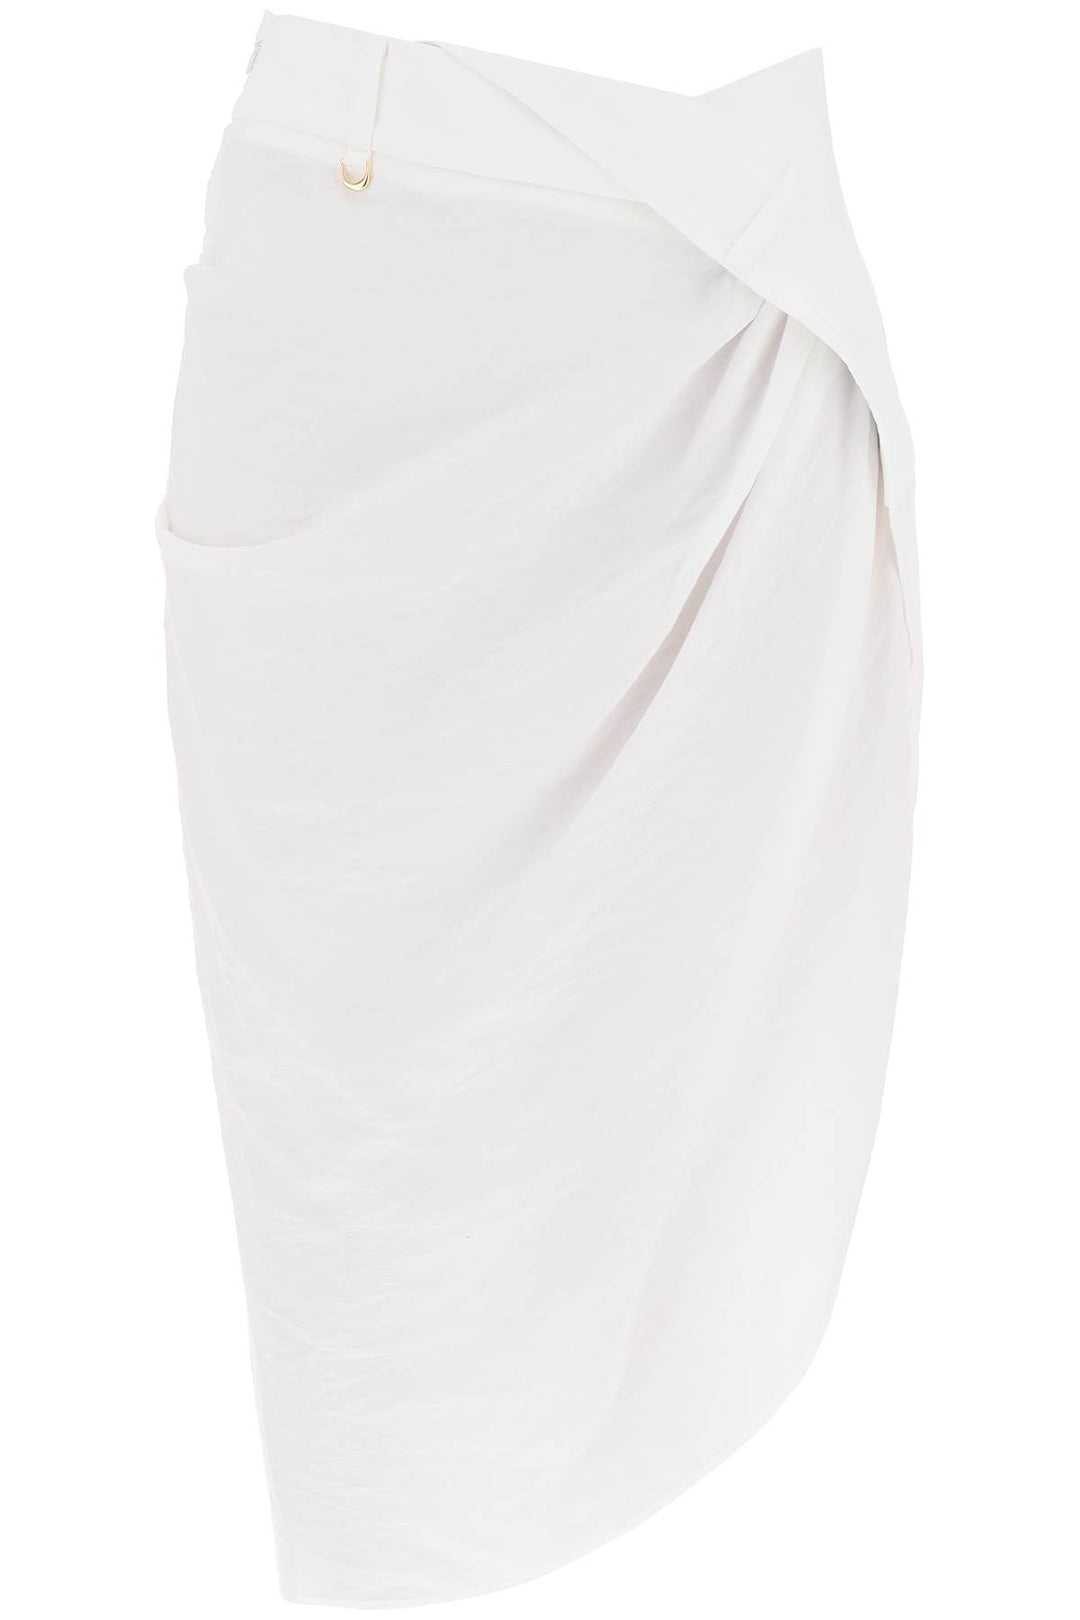 Jacquemus La Jupe Saudade Asymmetric Skirt   Bianco